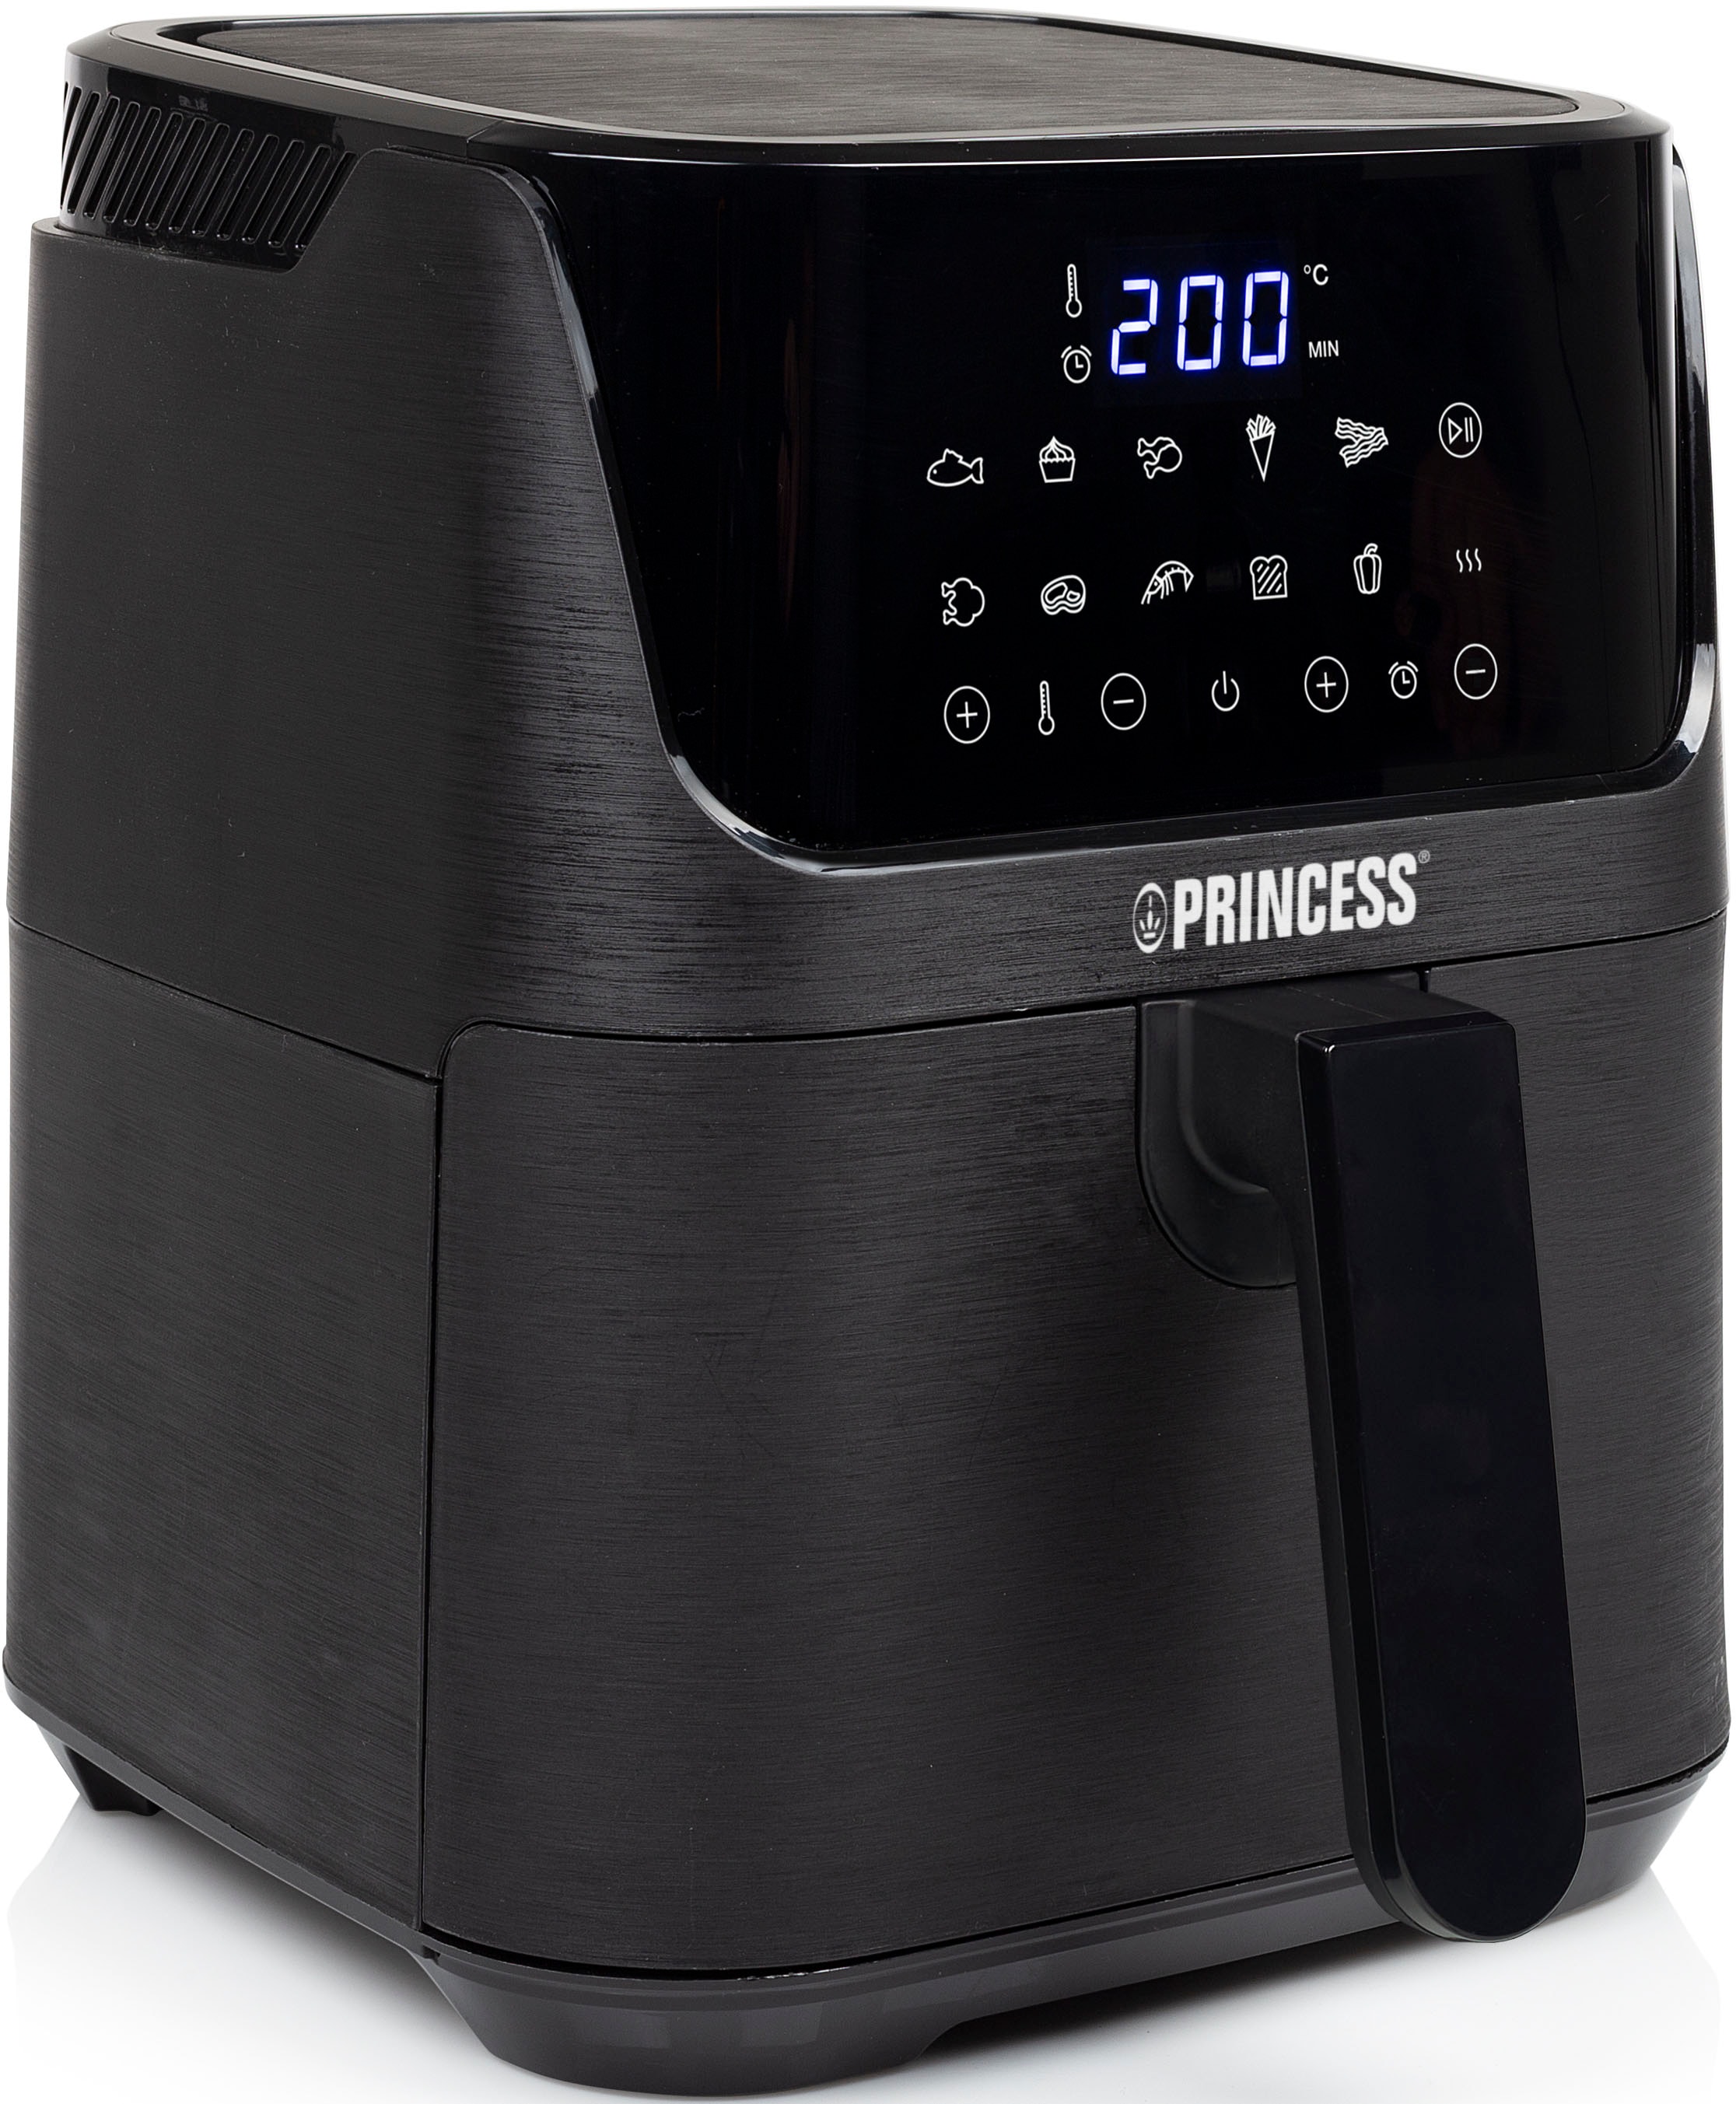 PRINCESS Heißluftfritteuse »182024«, 1350 W, Heißluftfritteuse XL - 3,5 L -  Digitaler Touchscreen mit 3 Jahren XXL Garantie